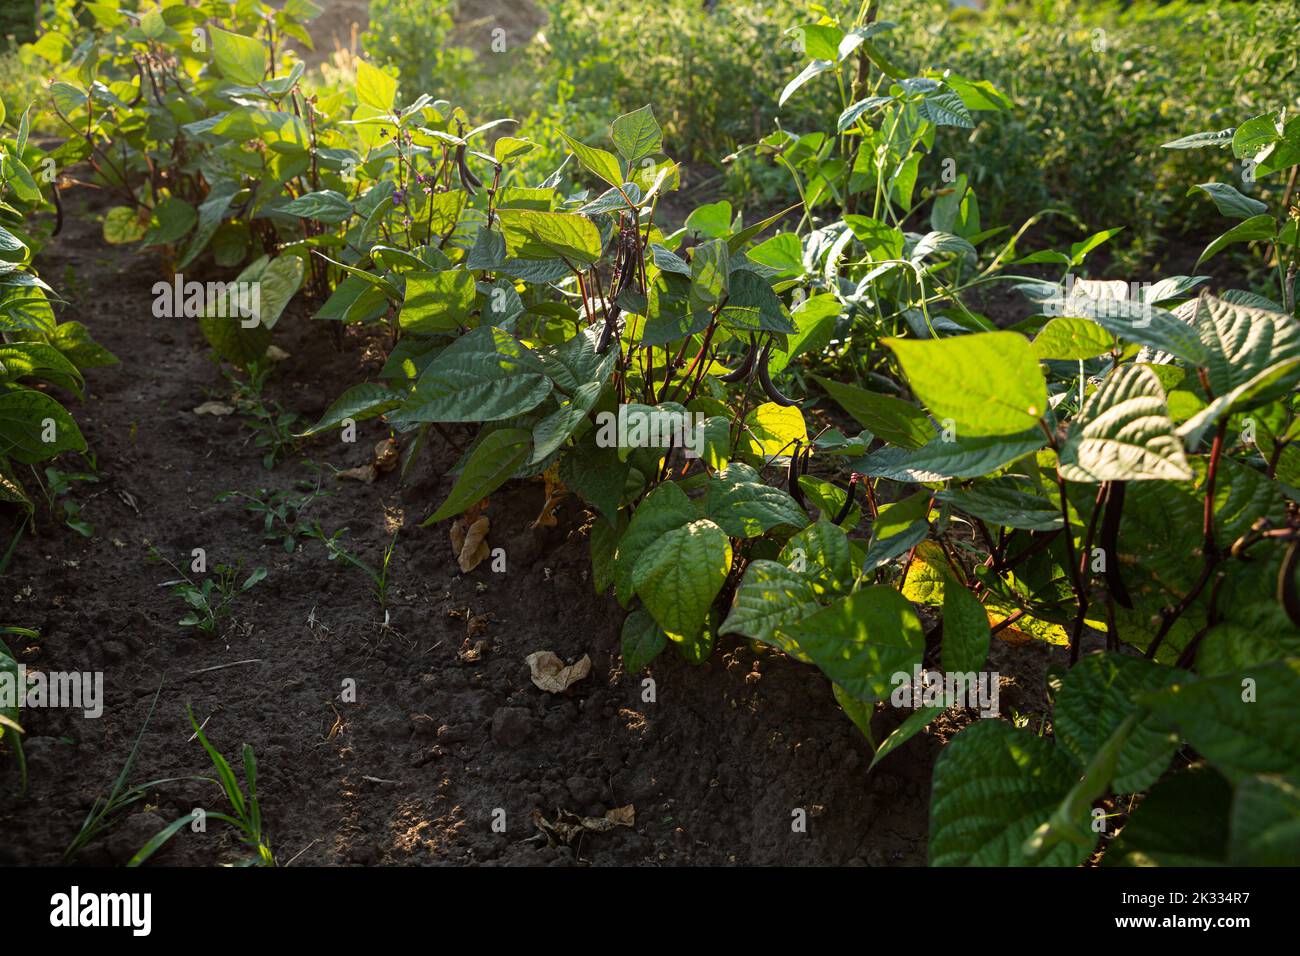 Vegetables garden green beans in sunlight gardening and homegrown produce Stock Photo